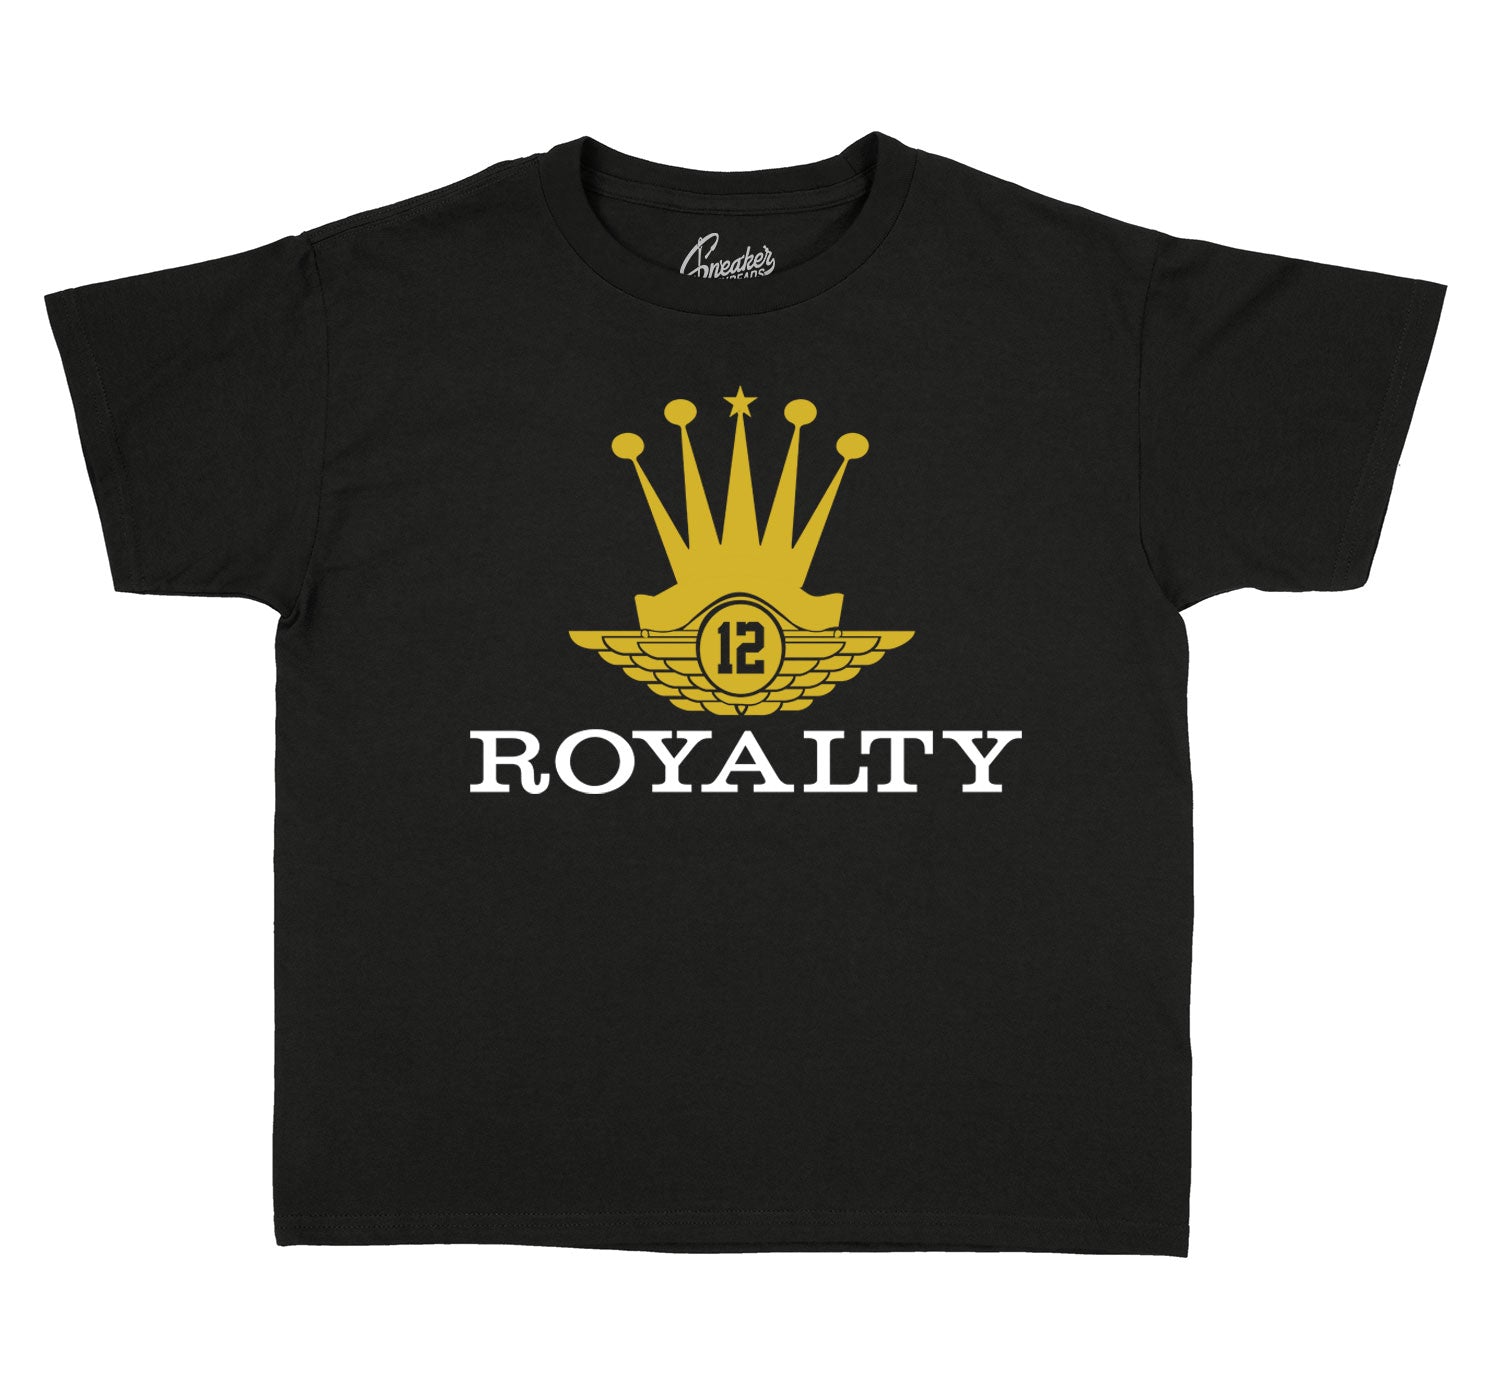 Kids Royalty 12 Shirt - Royalty  - Black